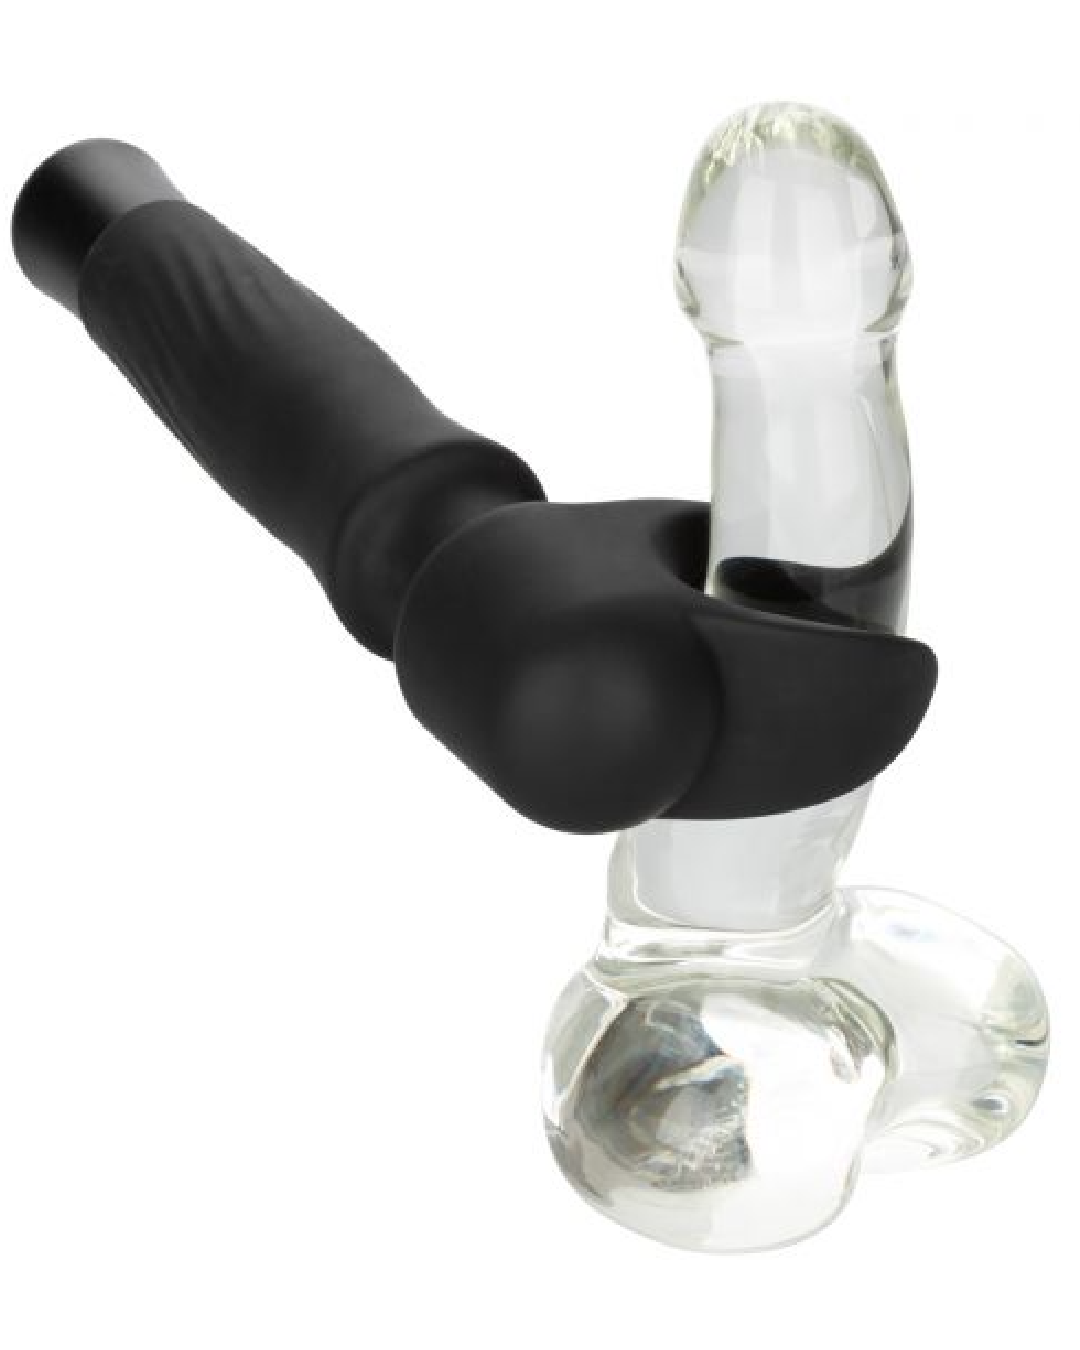 Optimum Power Masturwand Vibrating Masturbator used on a clear dildo